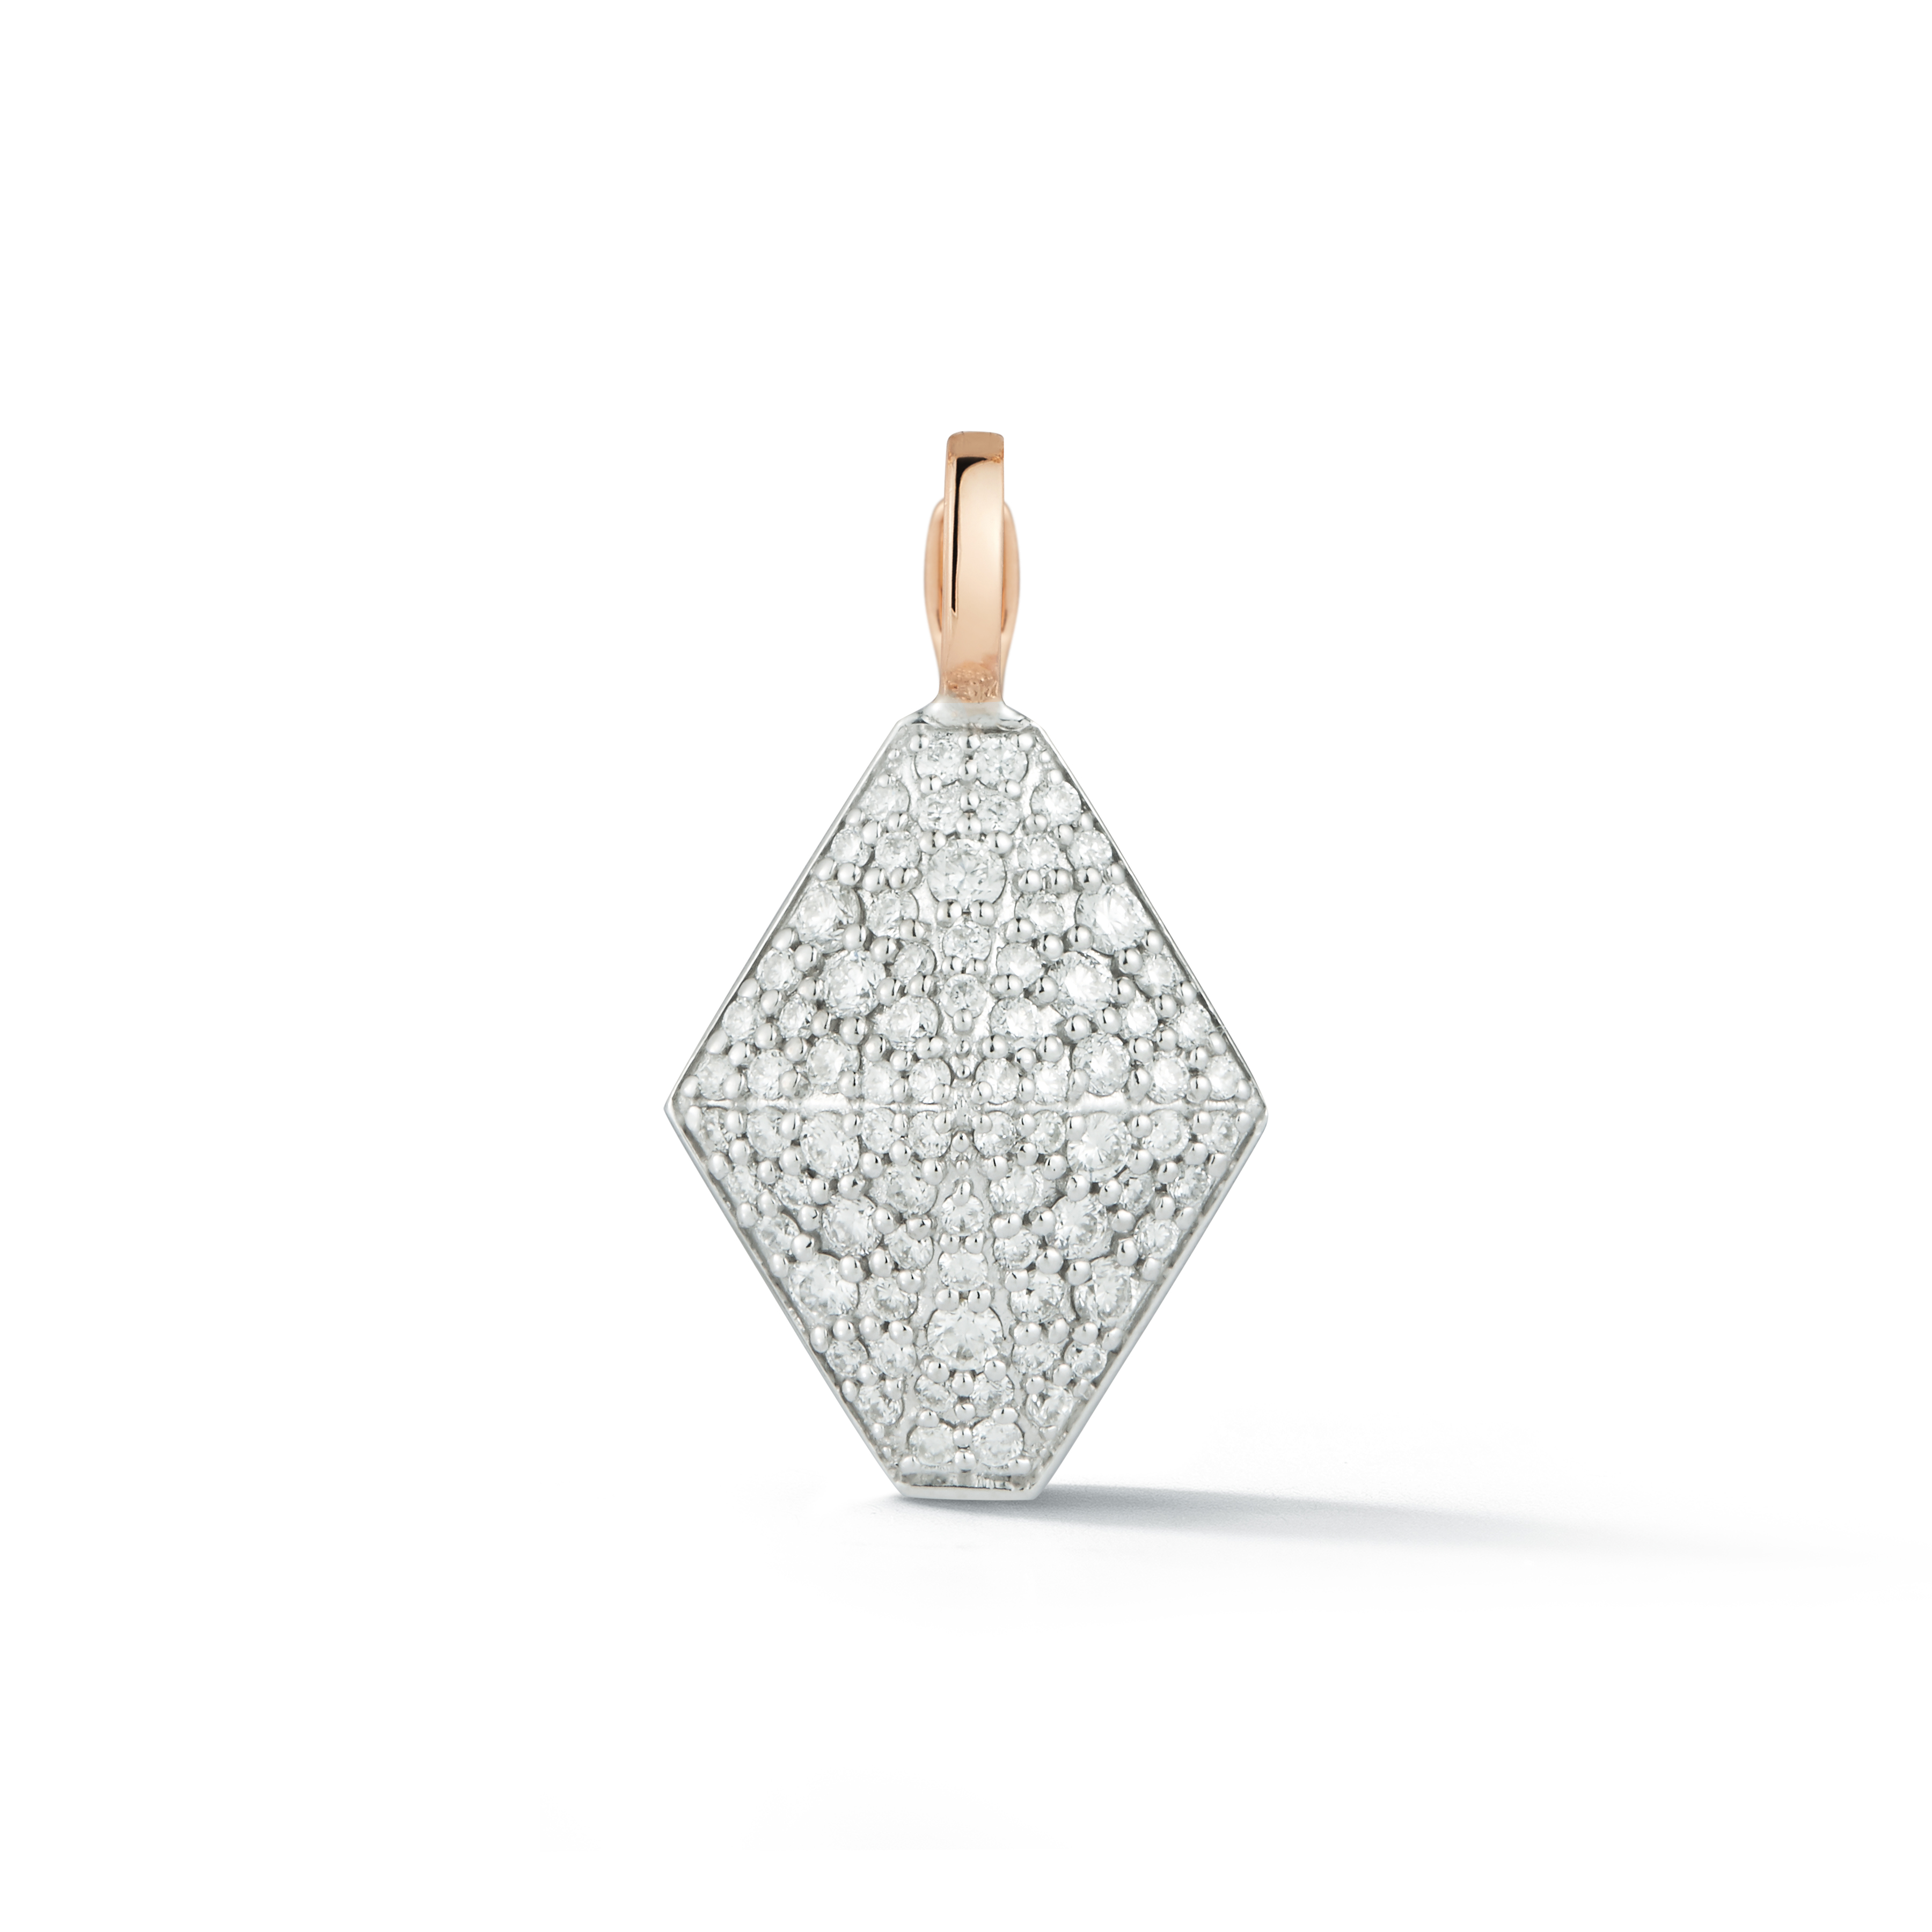 Walter's Faith 18kt Rose Gold and Pave Diamond Sydney Origami Charm Pendant